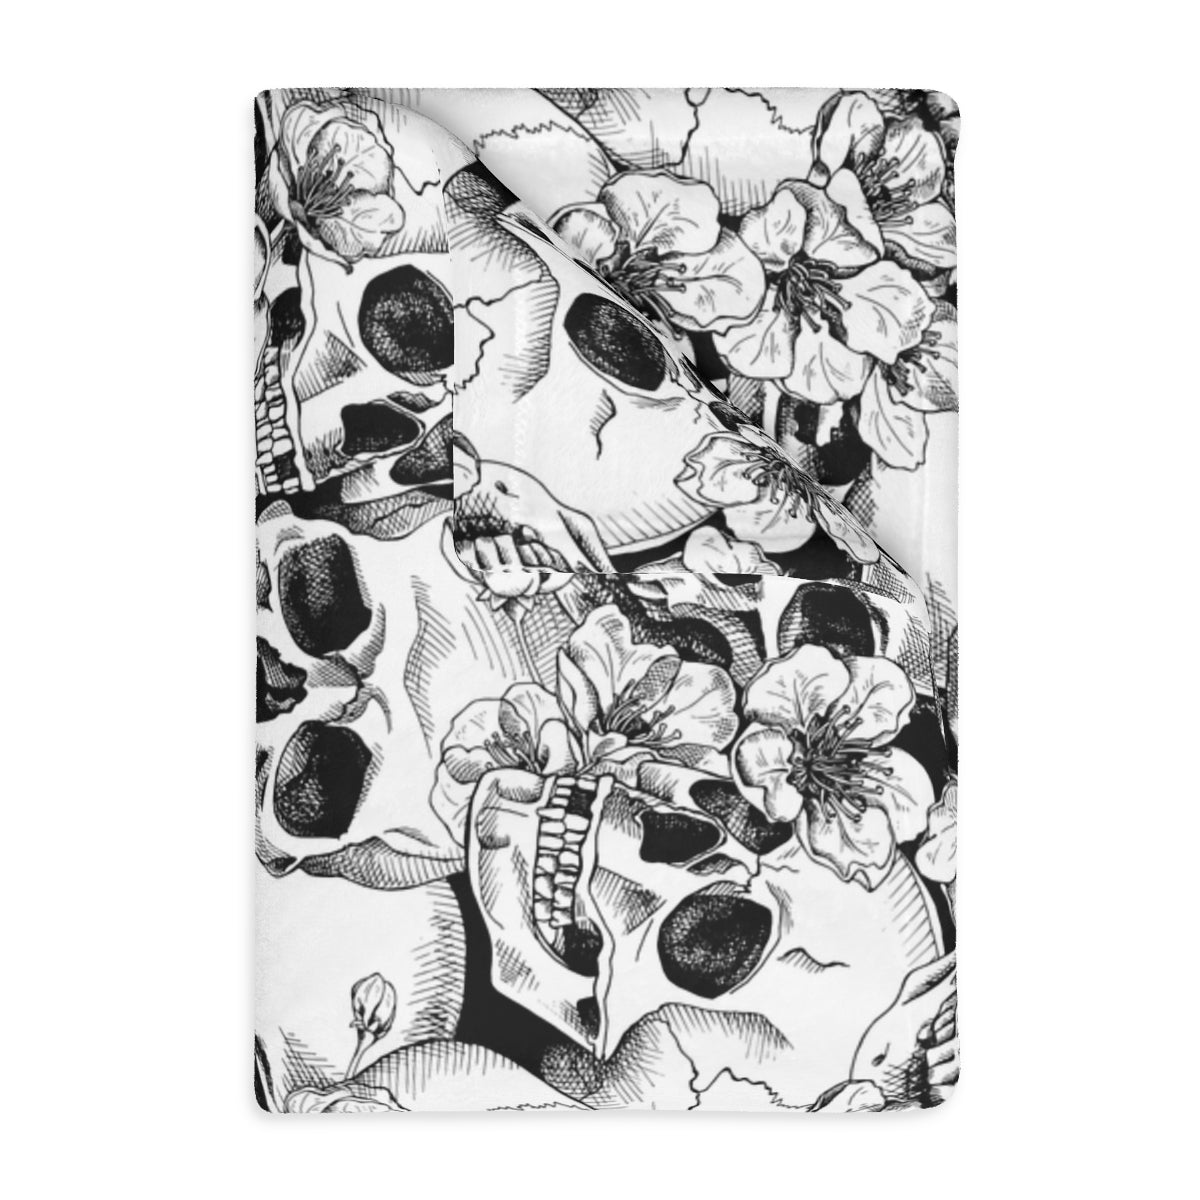 Skulls and Flowers Velveteen Minky Blanket (Two-sided print) - Puffin Lime